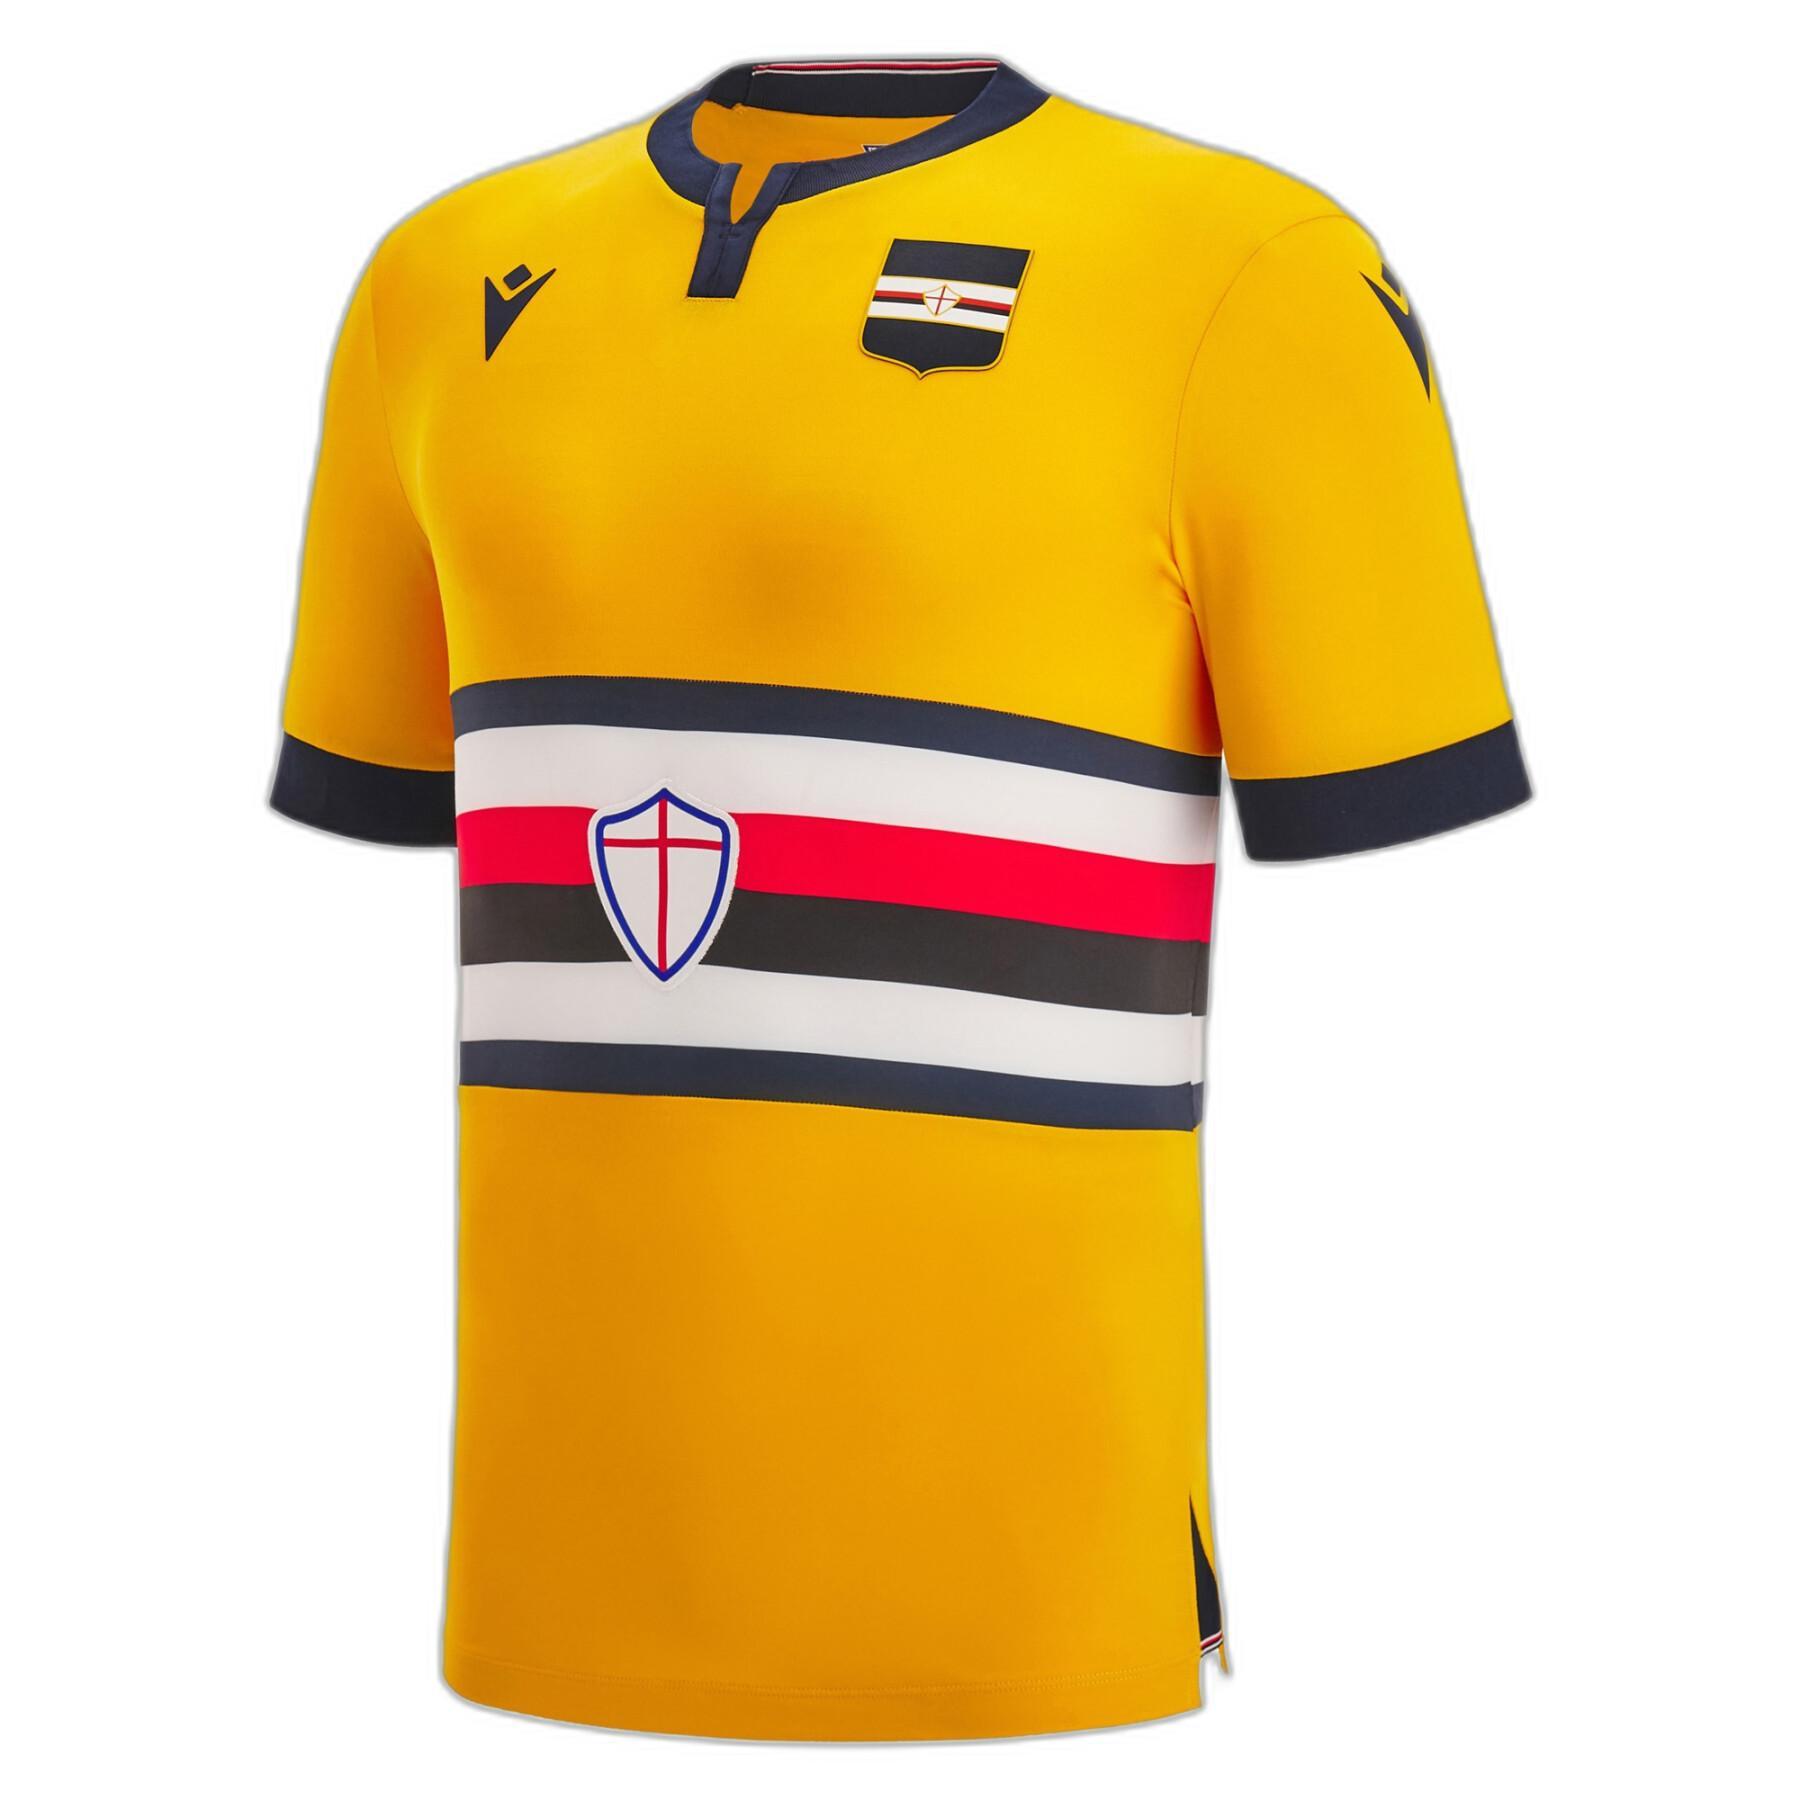 Terceira camisola da Sampdoria 2022/23 